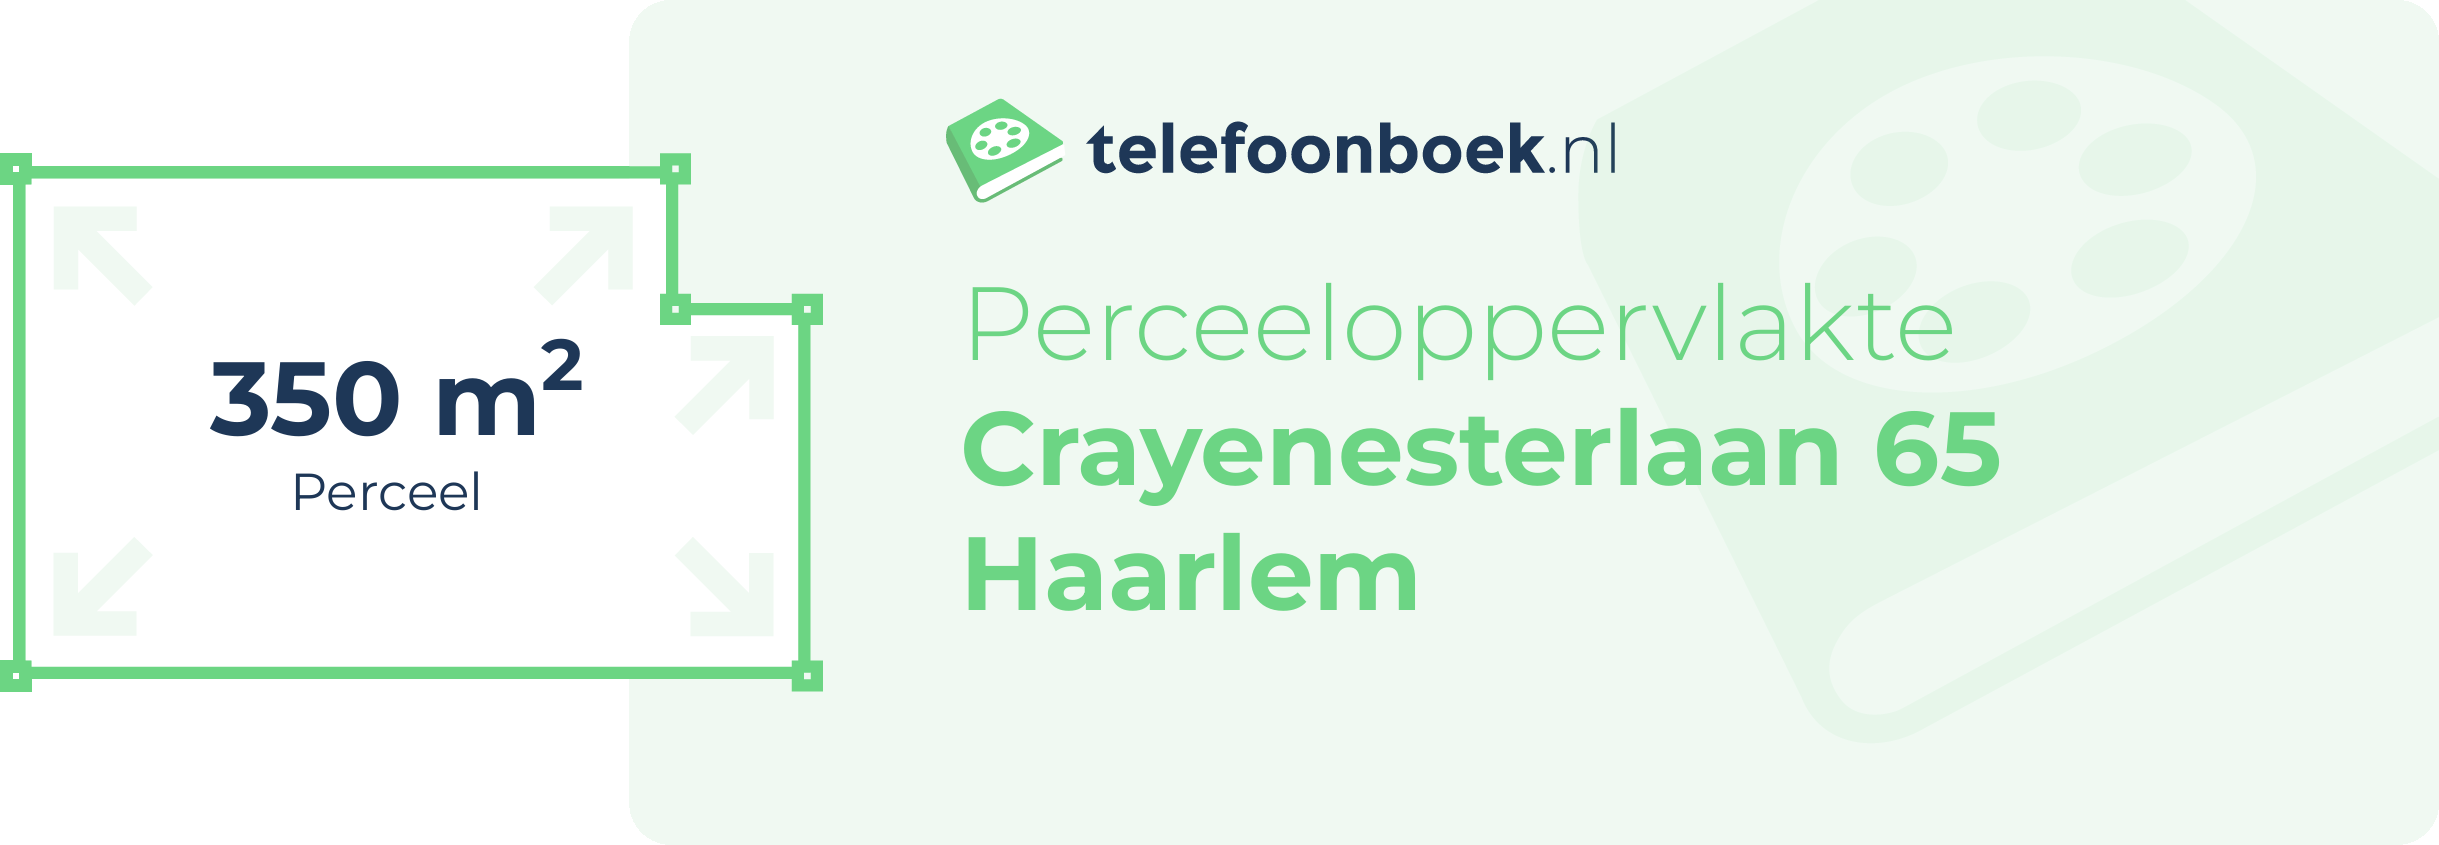 Perceeloppervlakte Crayenesterlaan 65 Haarlem